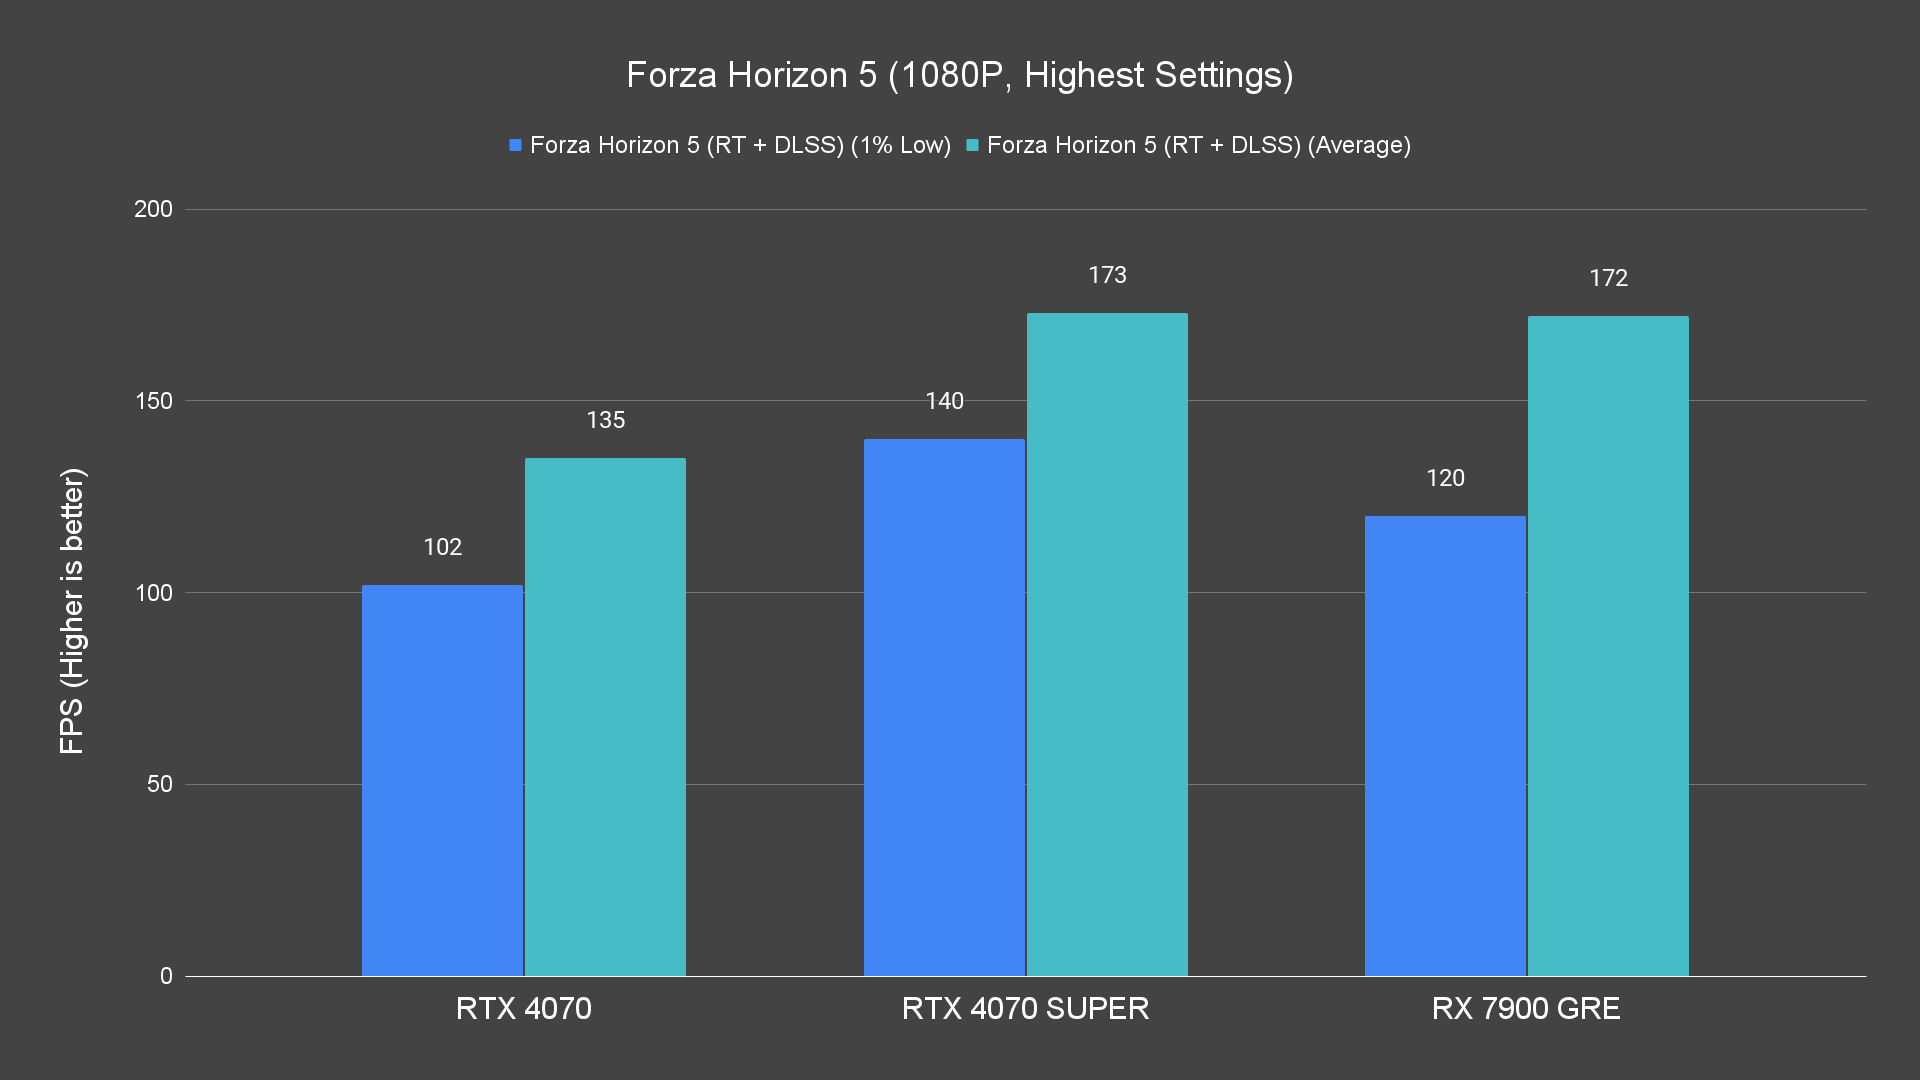 Forza Horizon 5 (1080P, Highest Settings) (1)